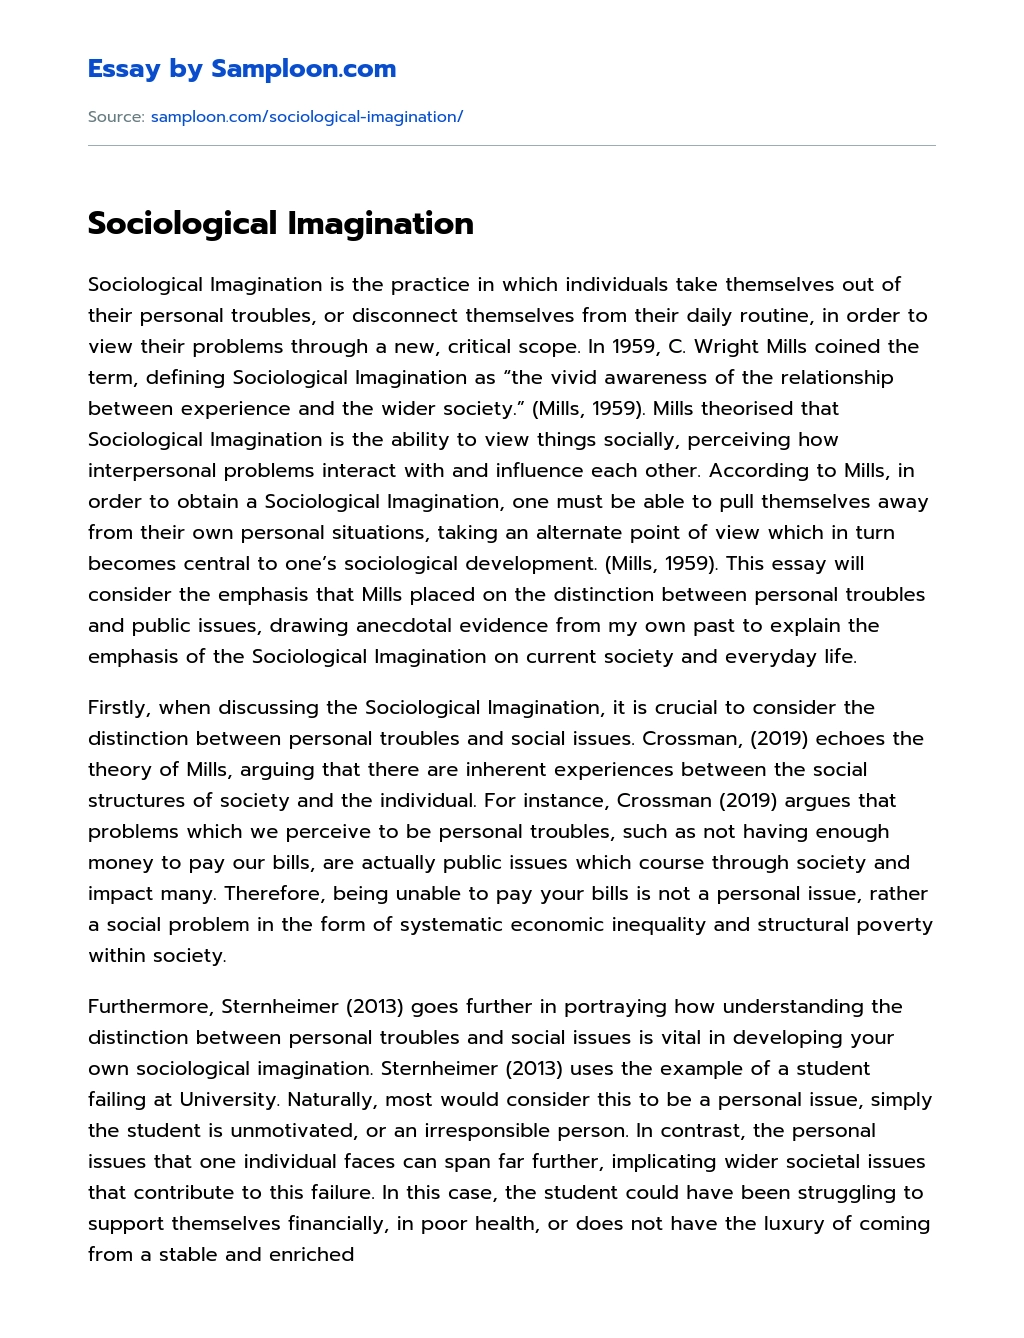 Sociological Imagination essay